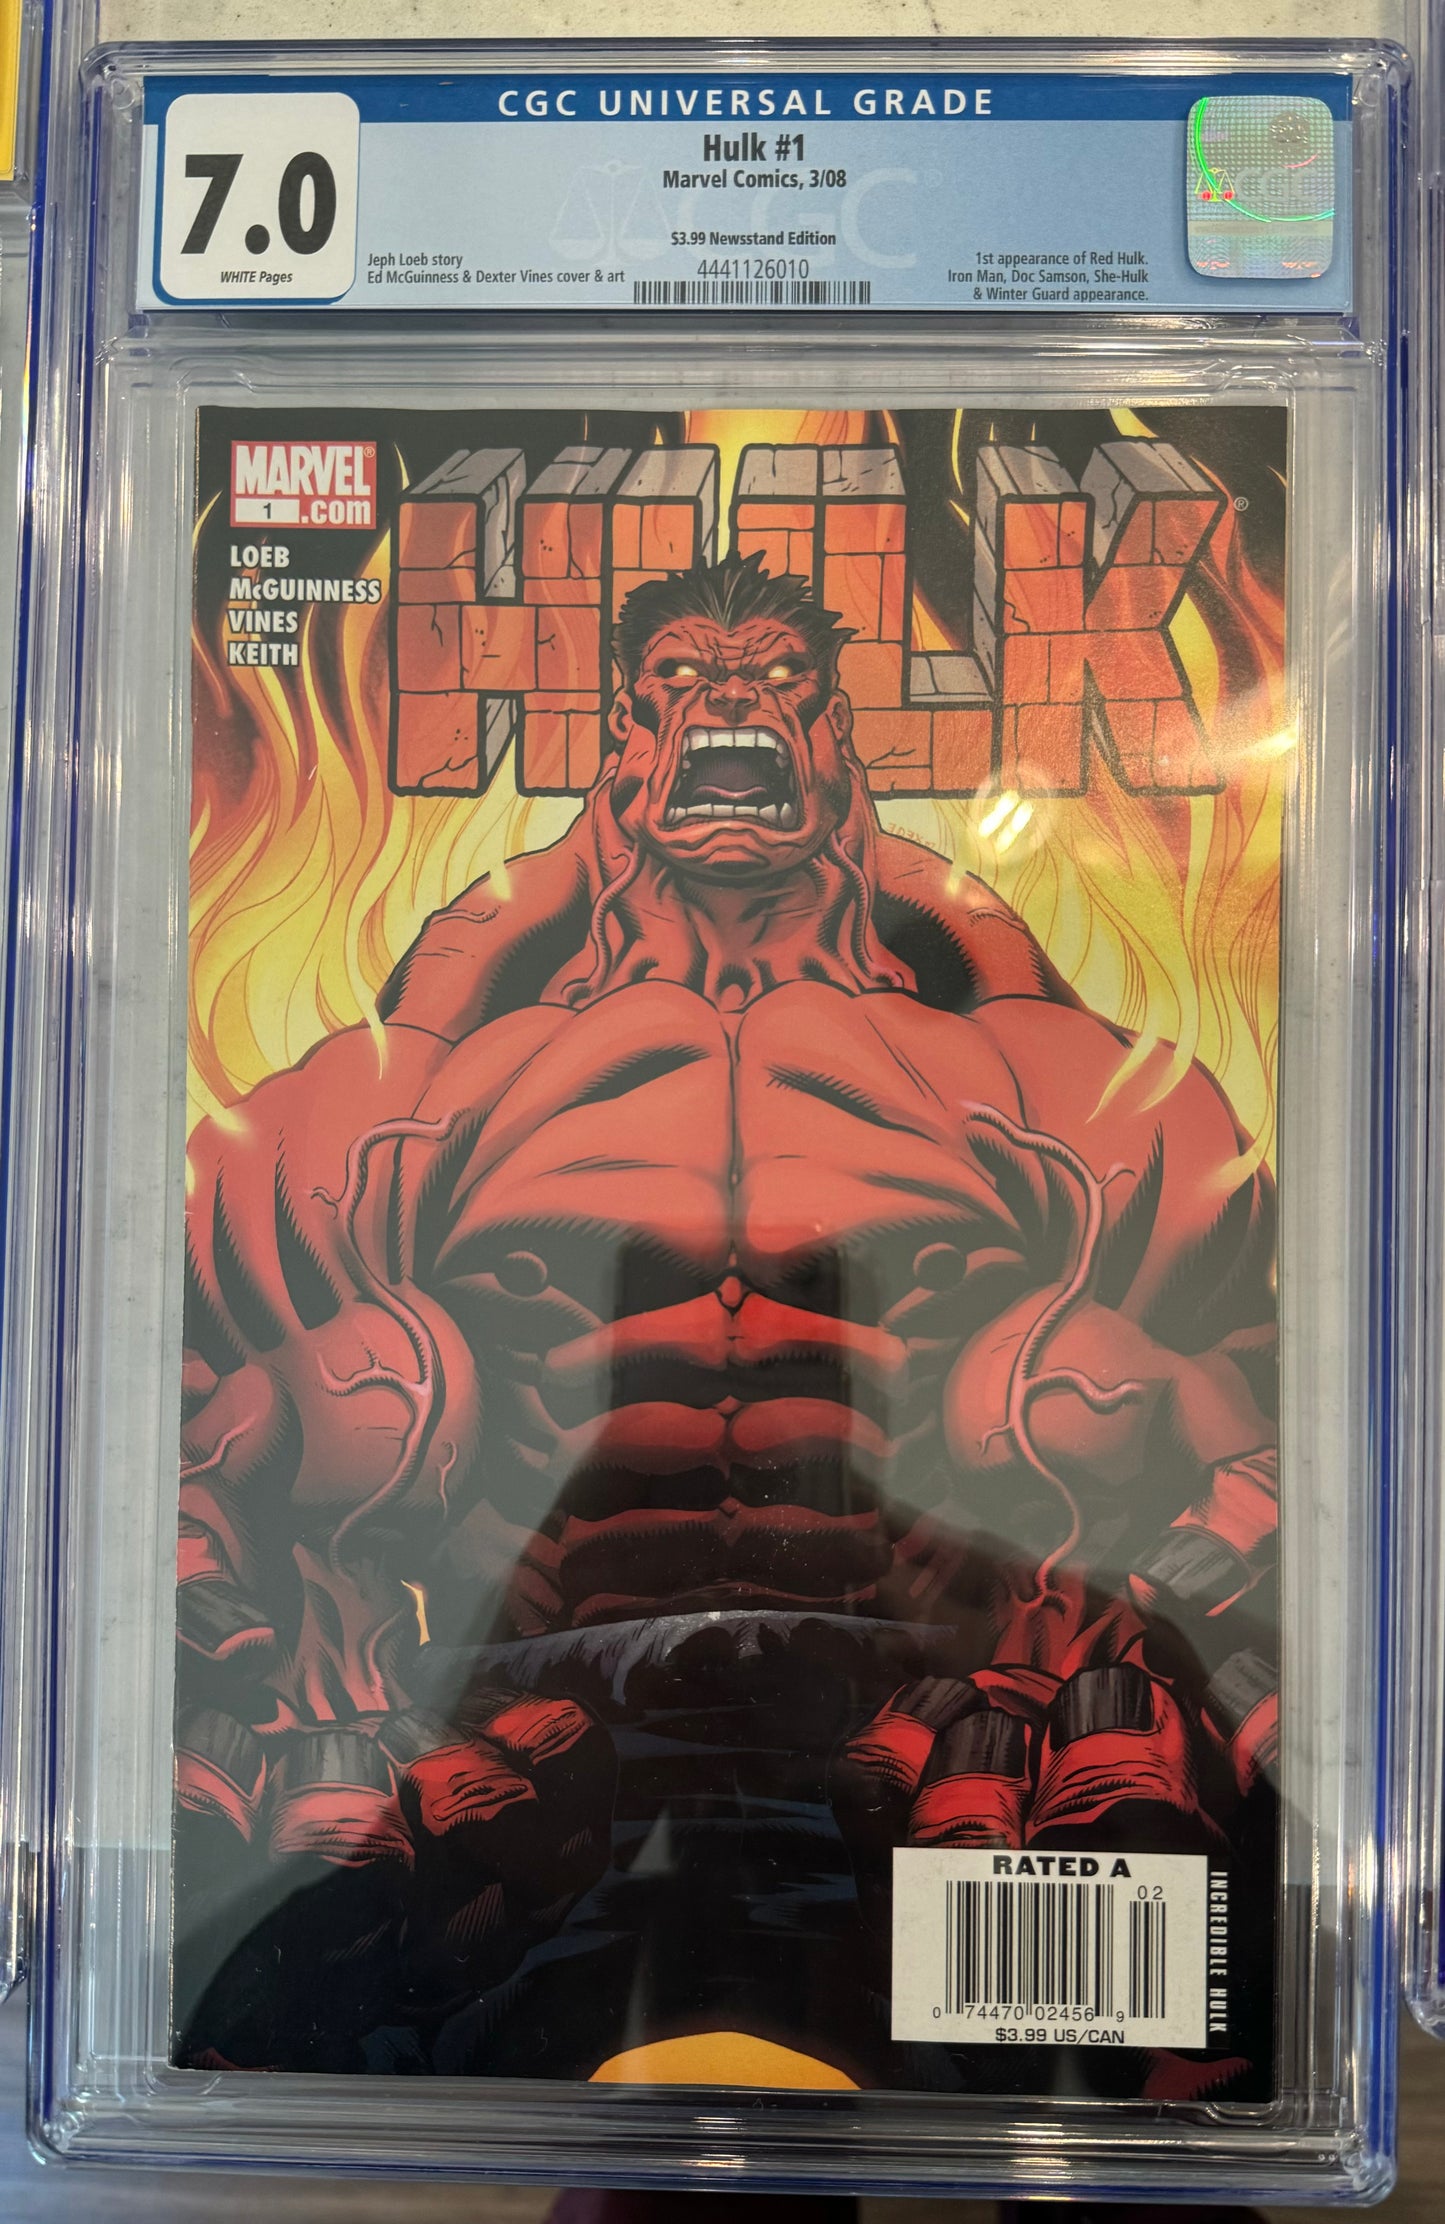 Hulk #1 CGC 7.0 (Marvel, 2004) $3.99 Newsstand Edition